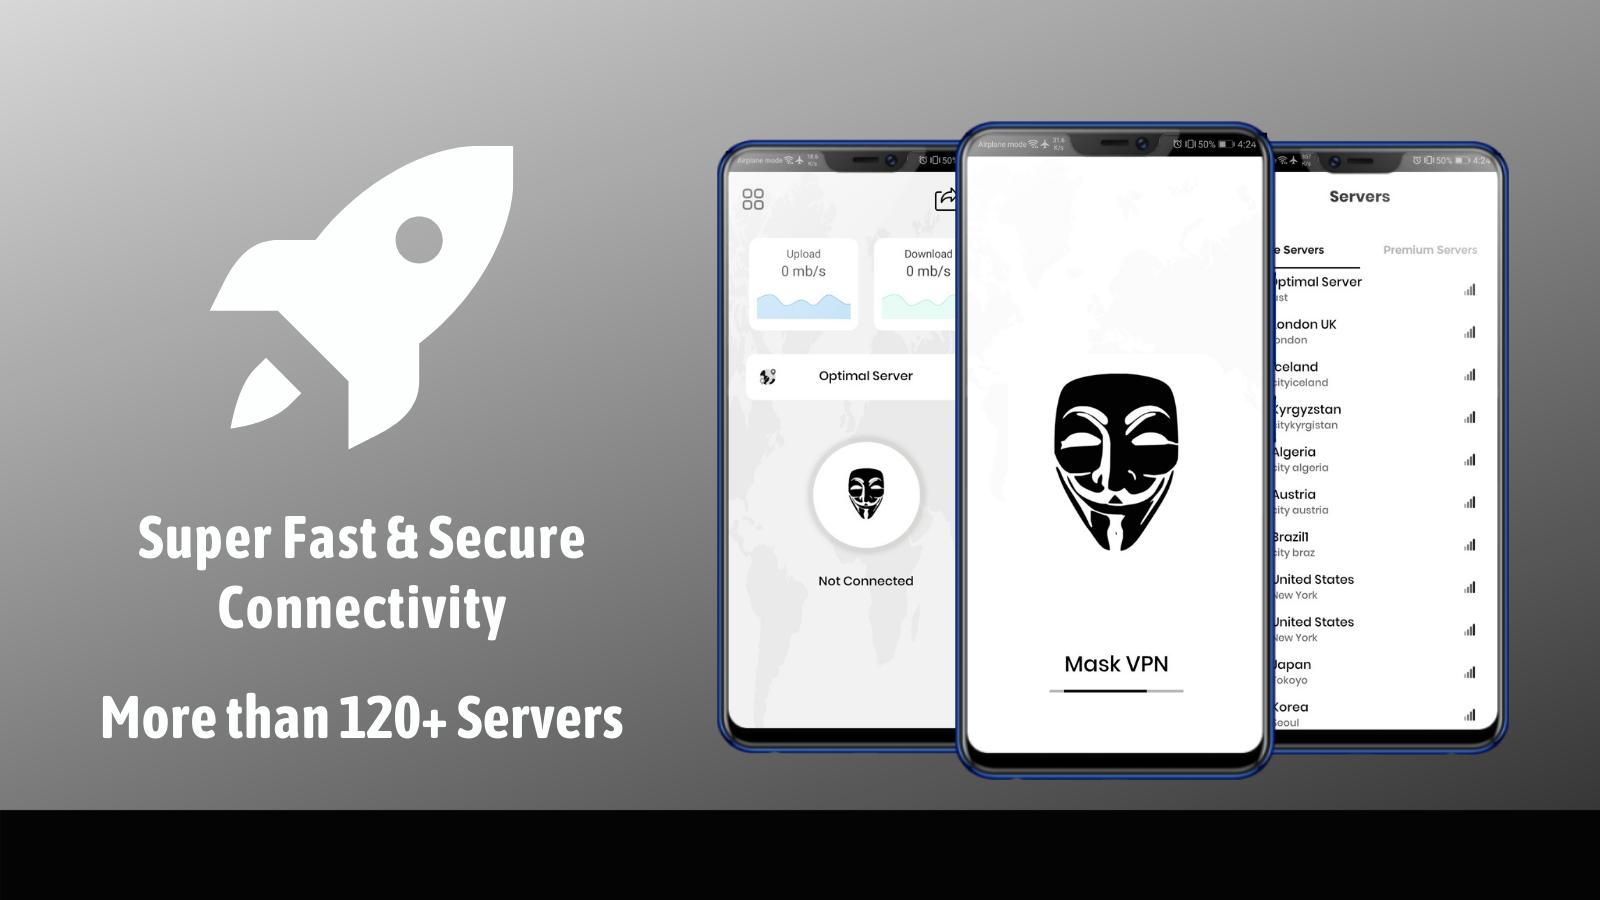 Mask VPN. Hiden VPN маска. Программа маска. Mini Mask приложение. Маски в андроиде как сделать